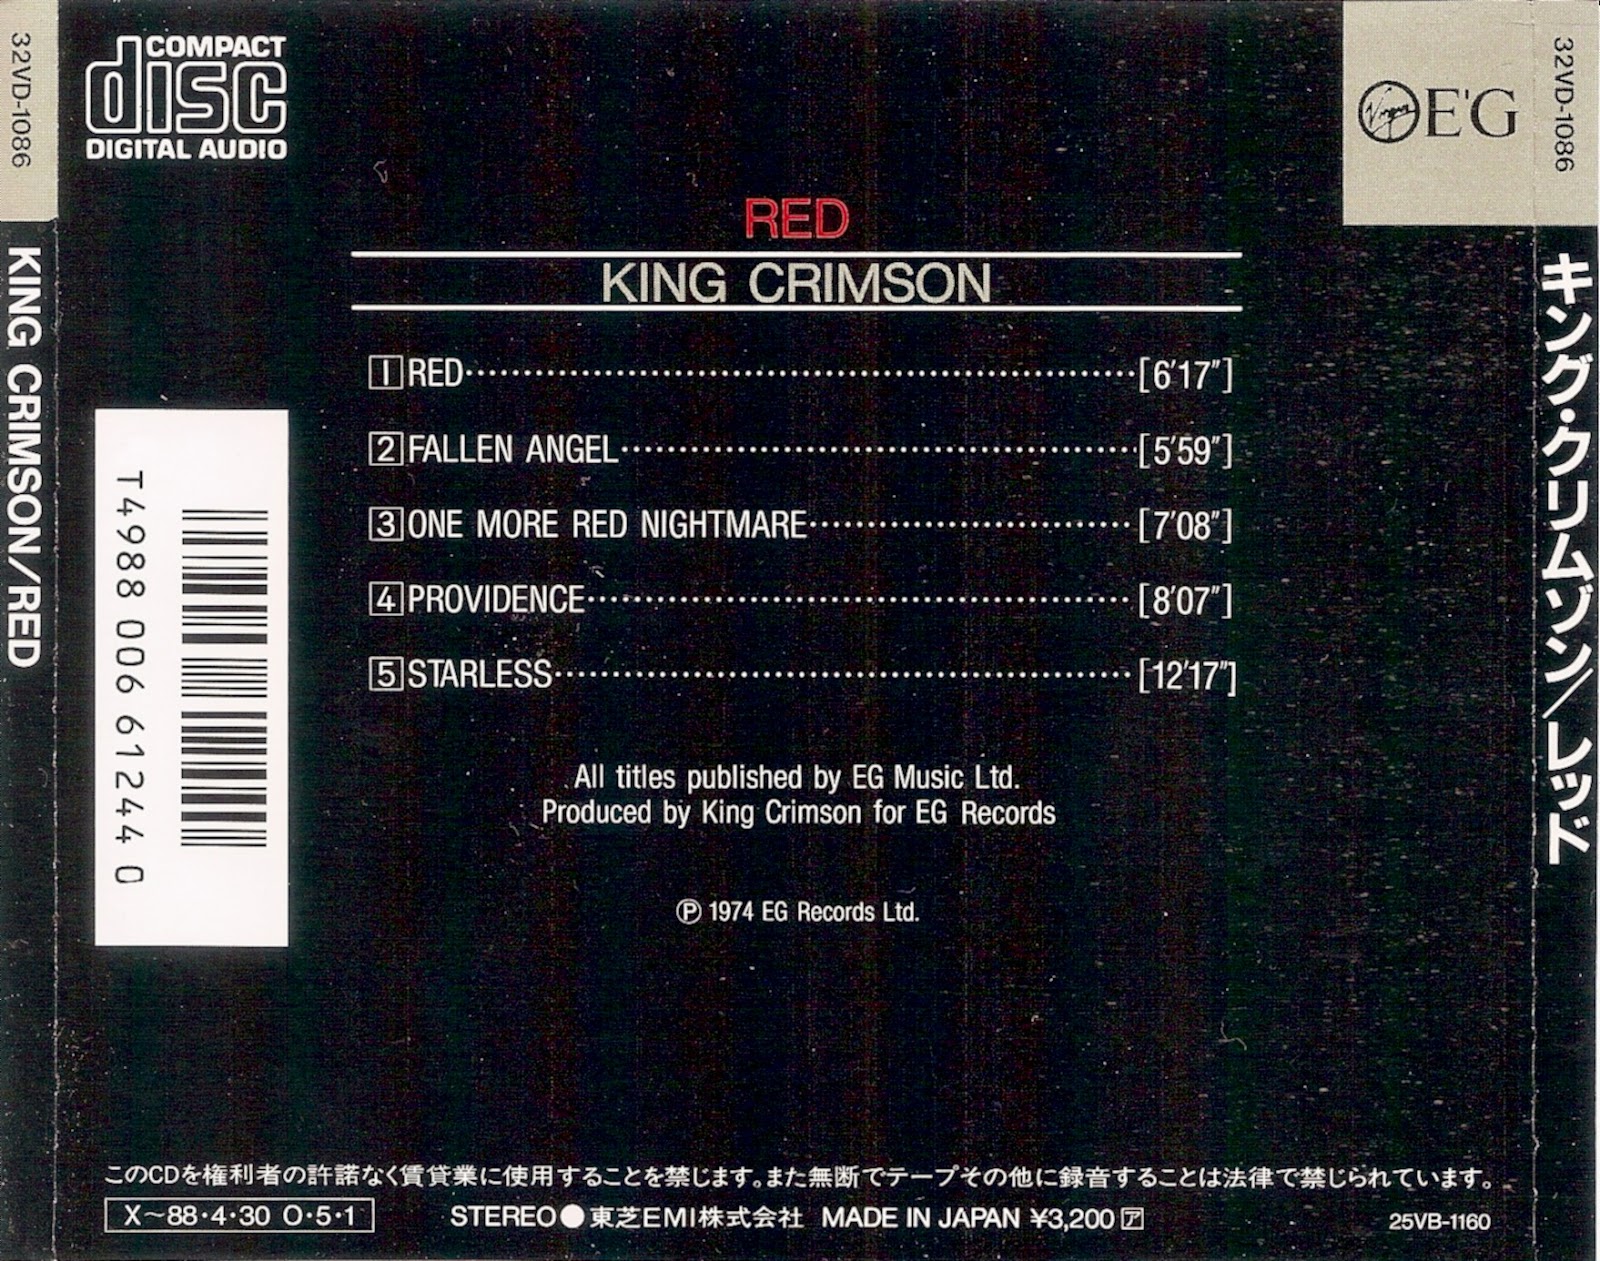 1974 - King Crimson - Red.rar